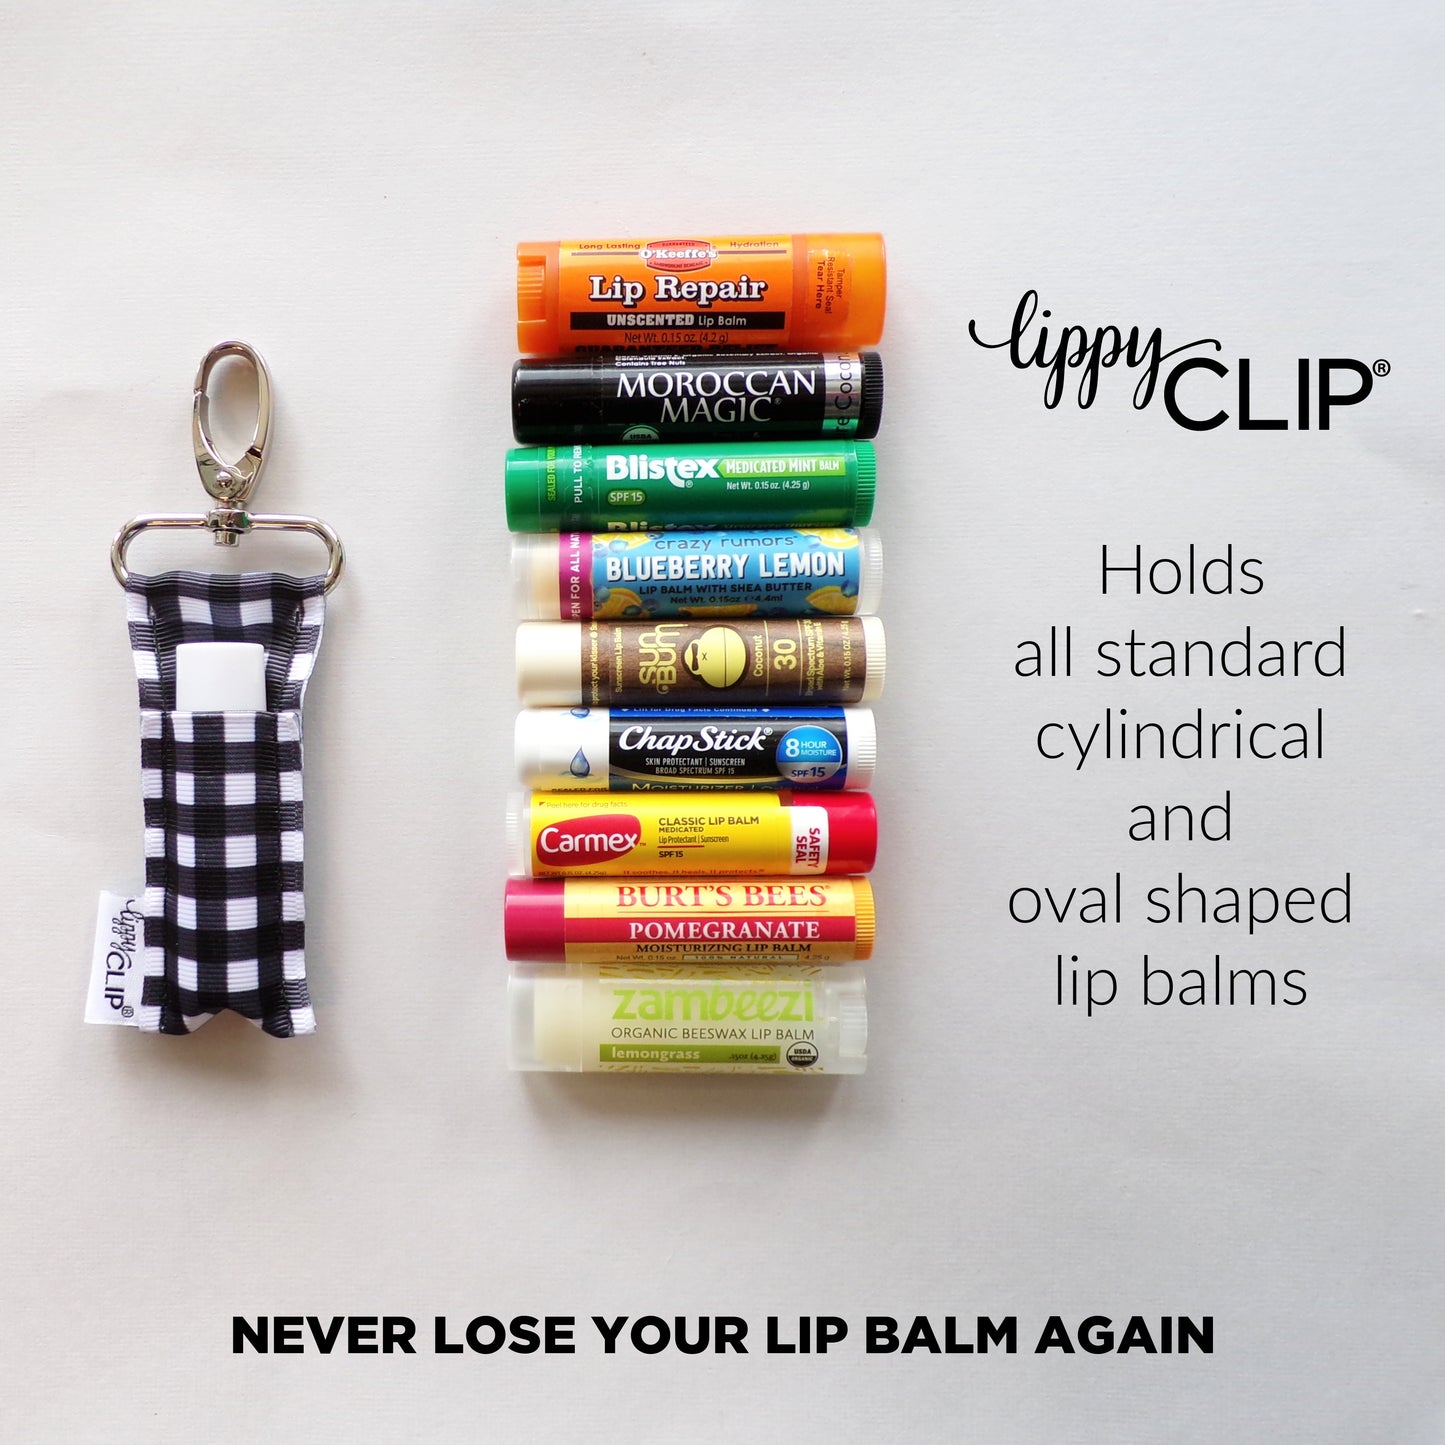 Chocolate Bunnies LippyClip® Lip Balm Holder